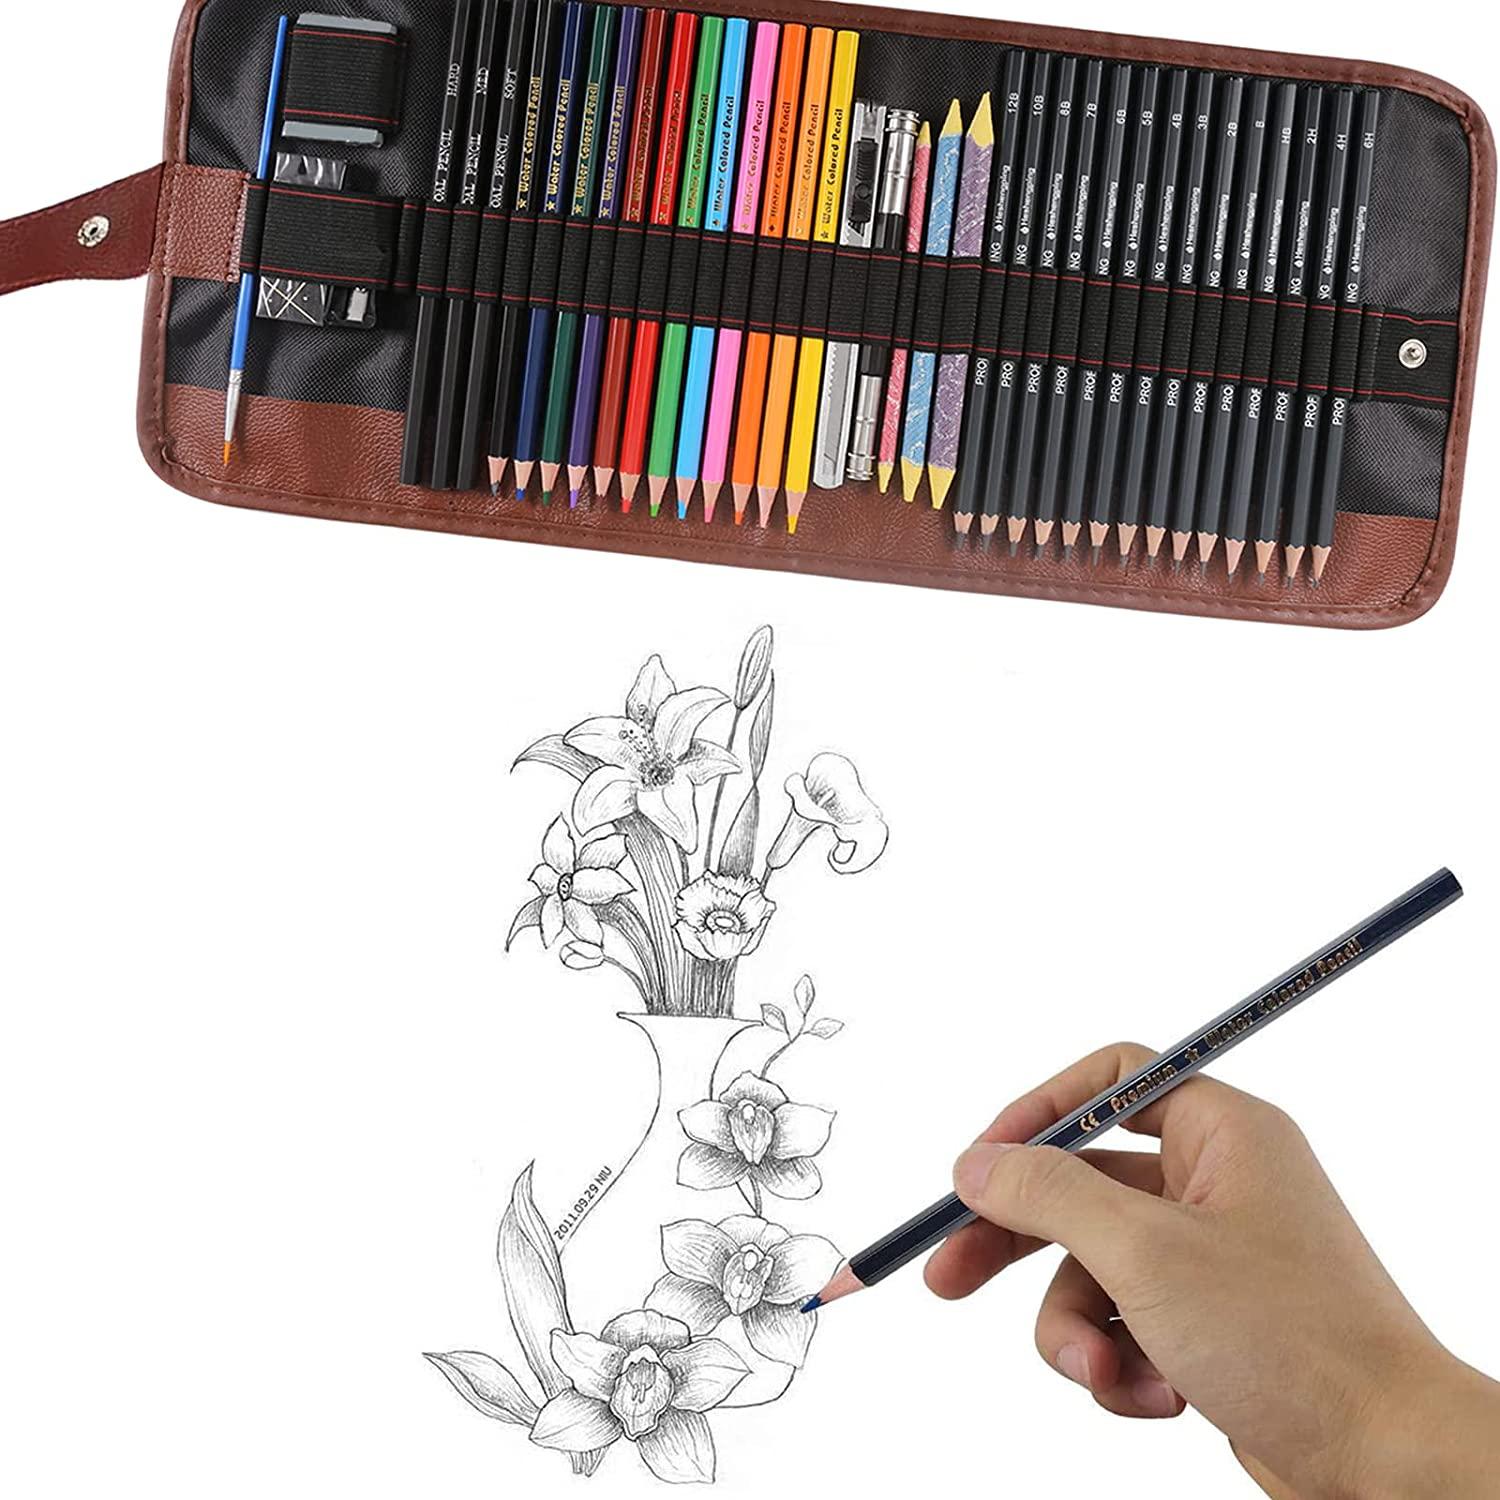 Heshengping, Sketching Pencil Set Drawing Pen Charcoal Sketch Kit